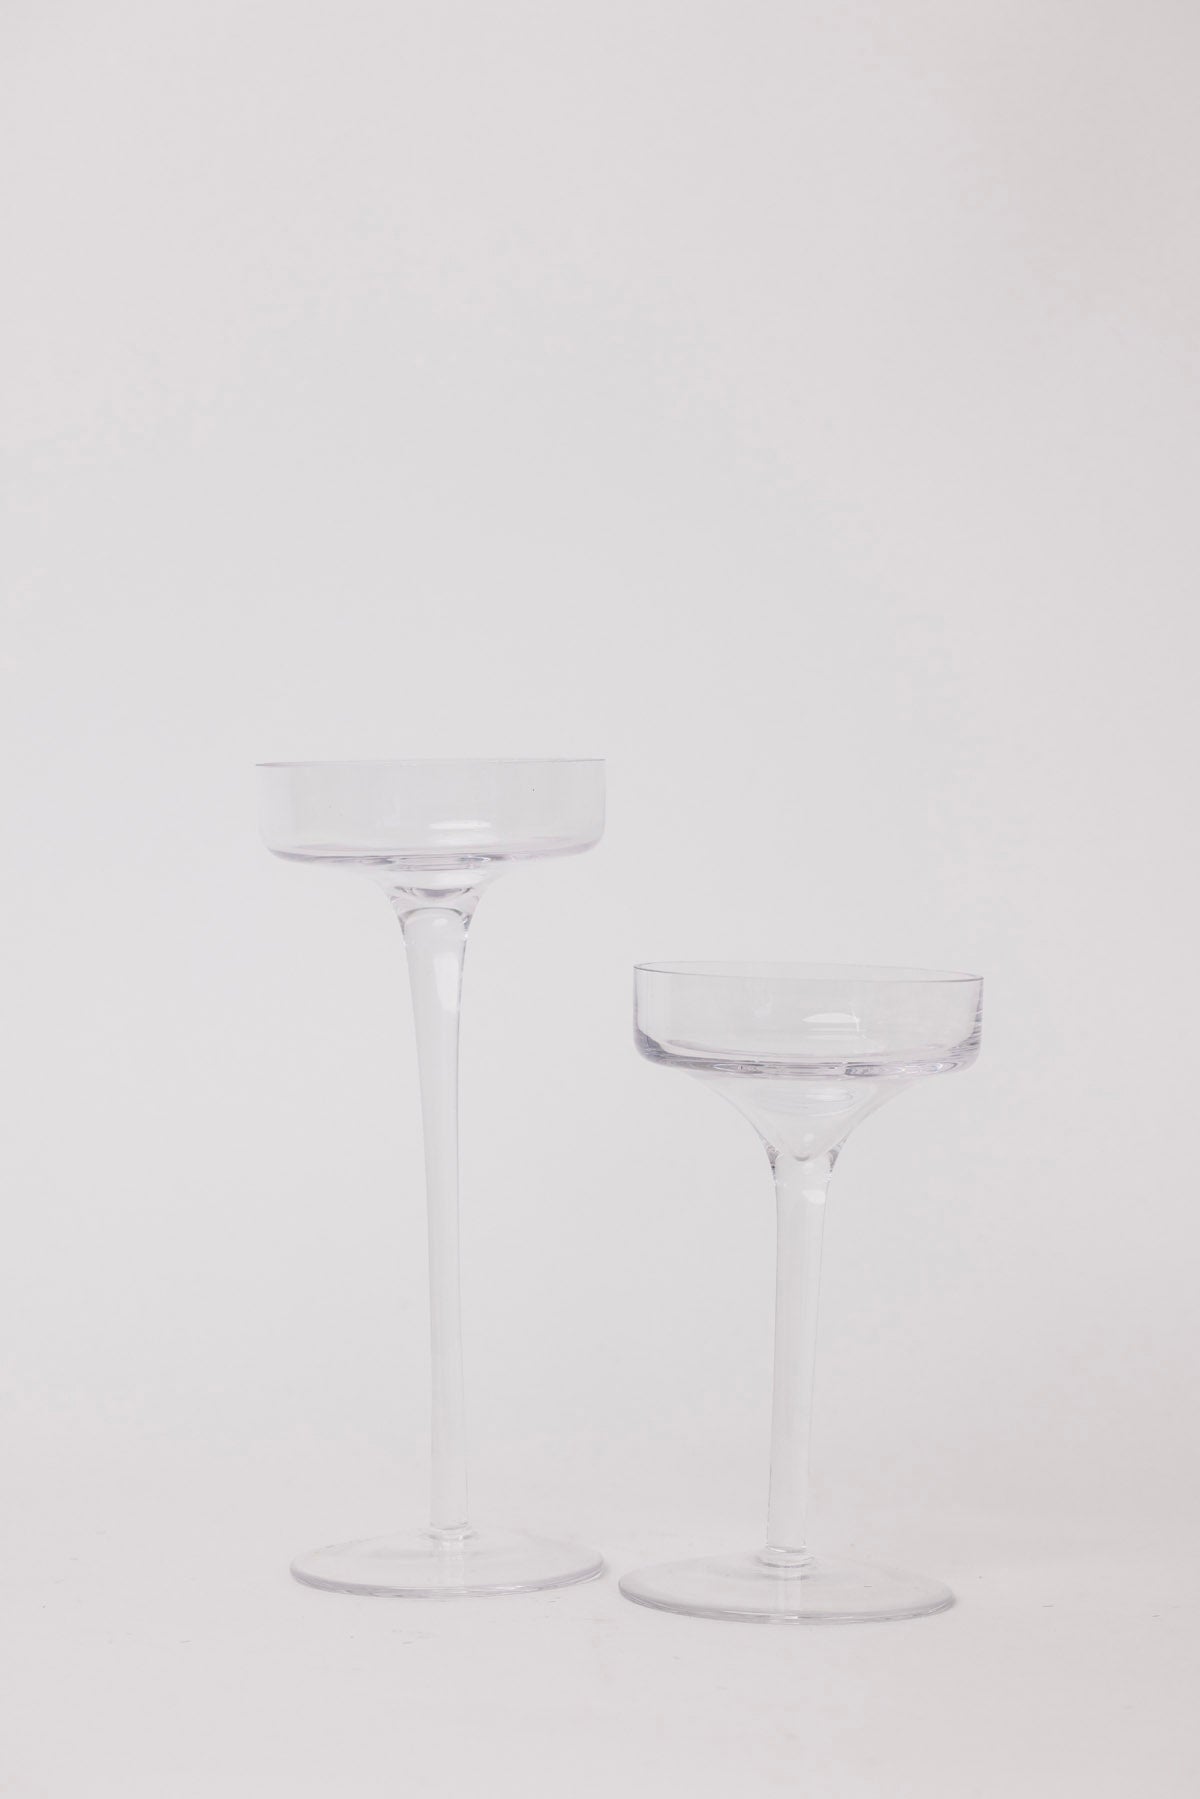 Lumi Glass Pillar Holder - 2 Sizes